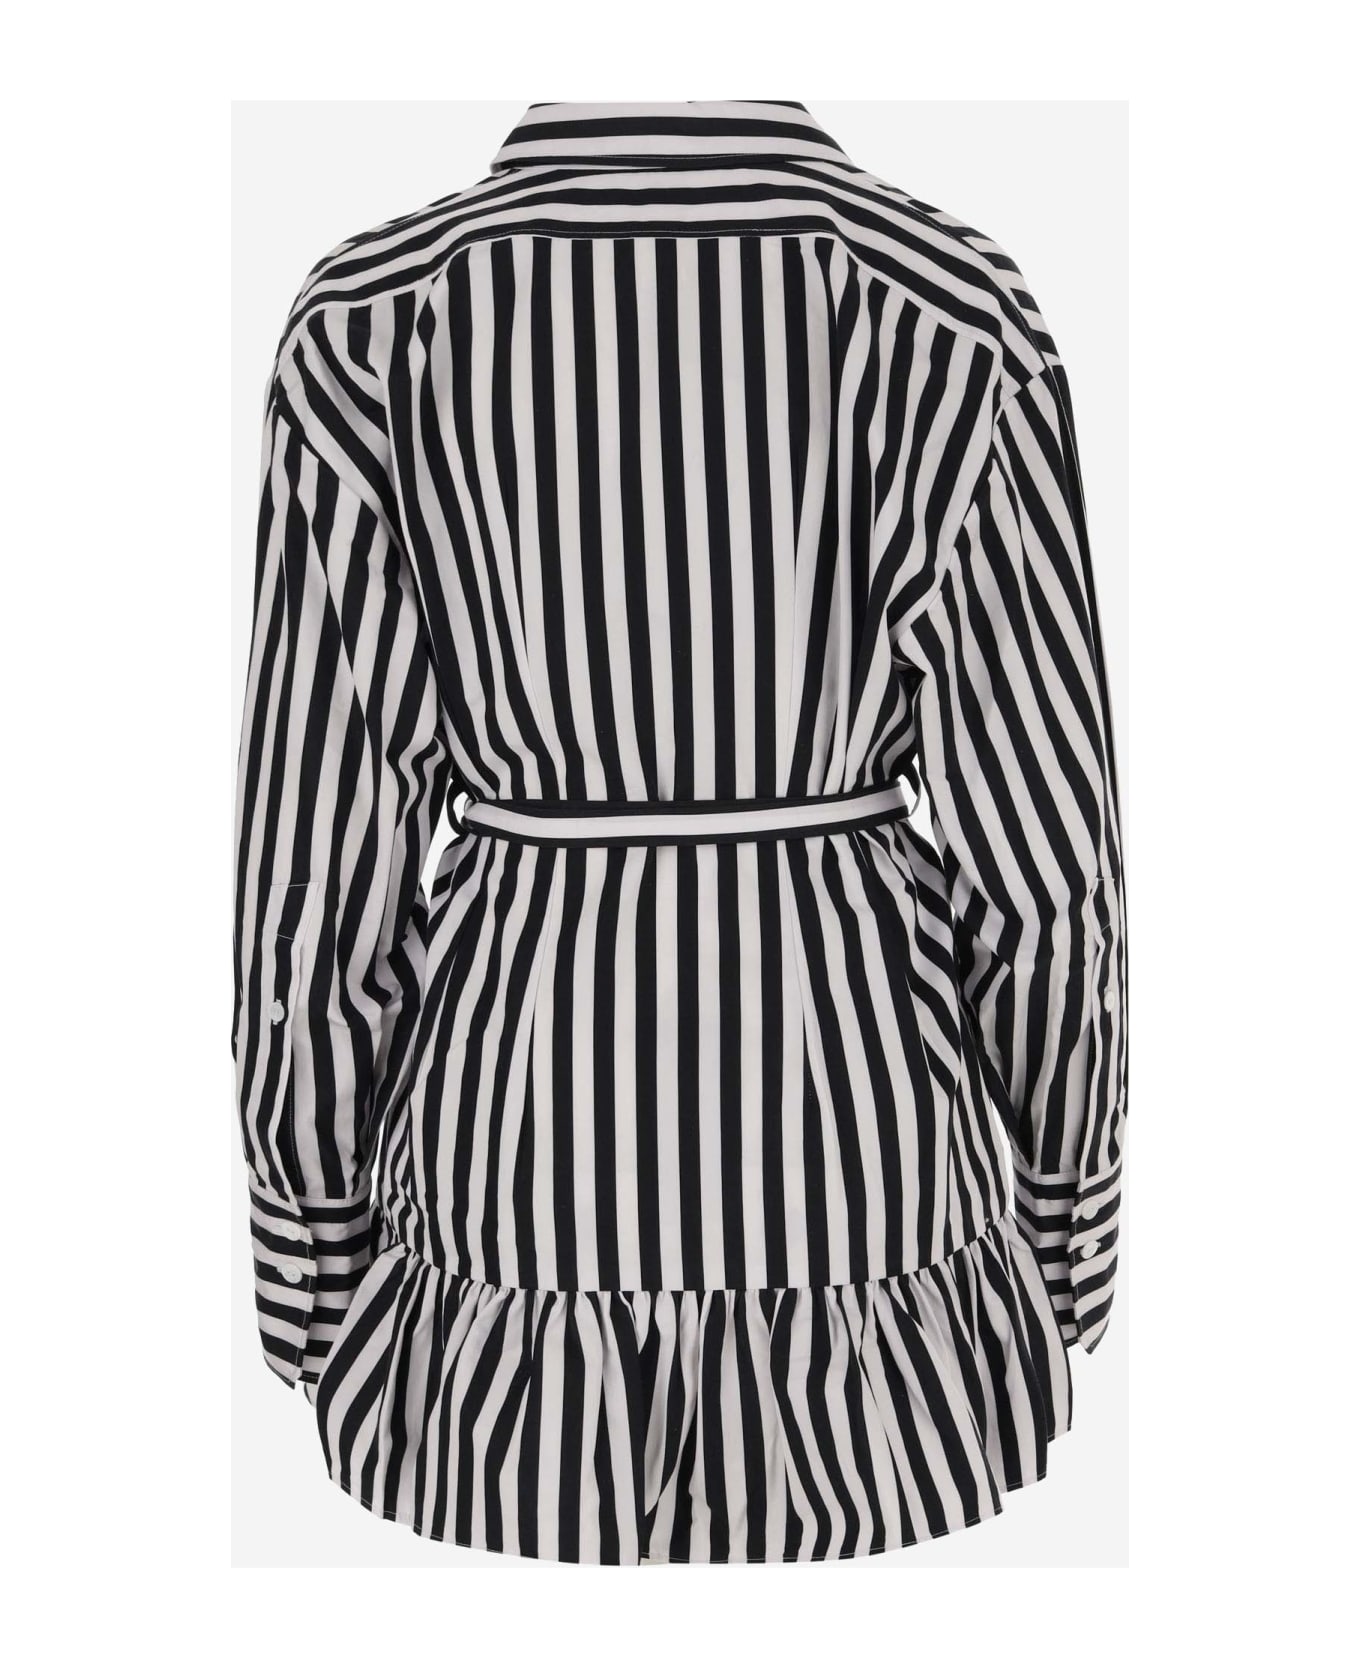 Patou Cotton Dress With Striped Pattern - BLACK SMALL コート